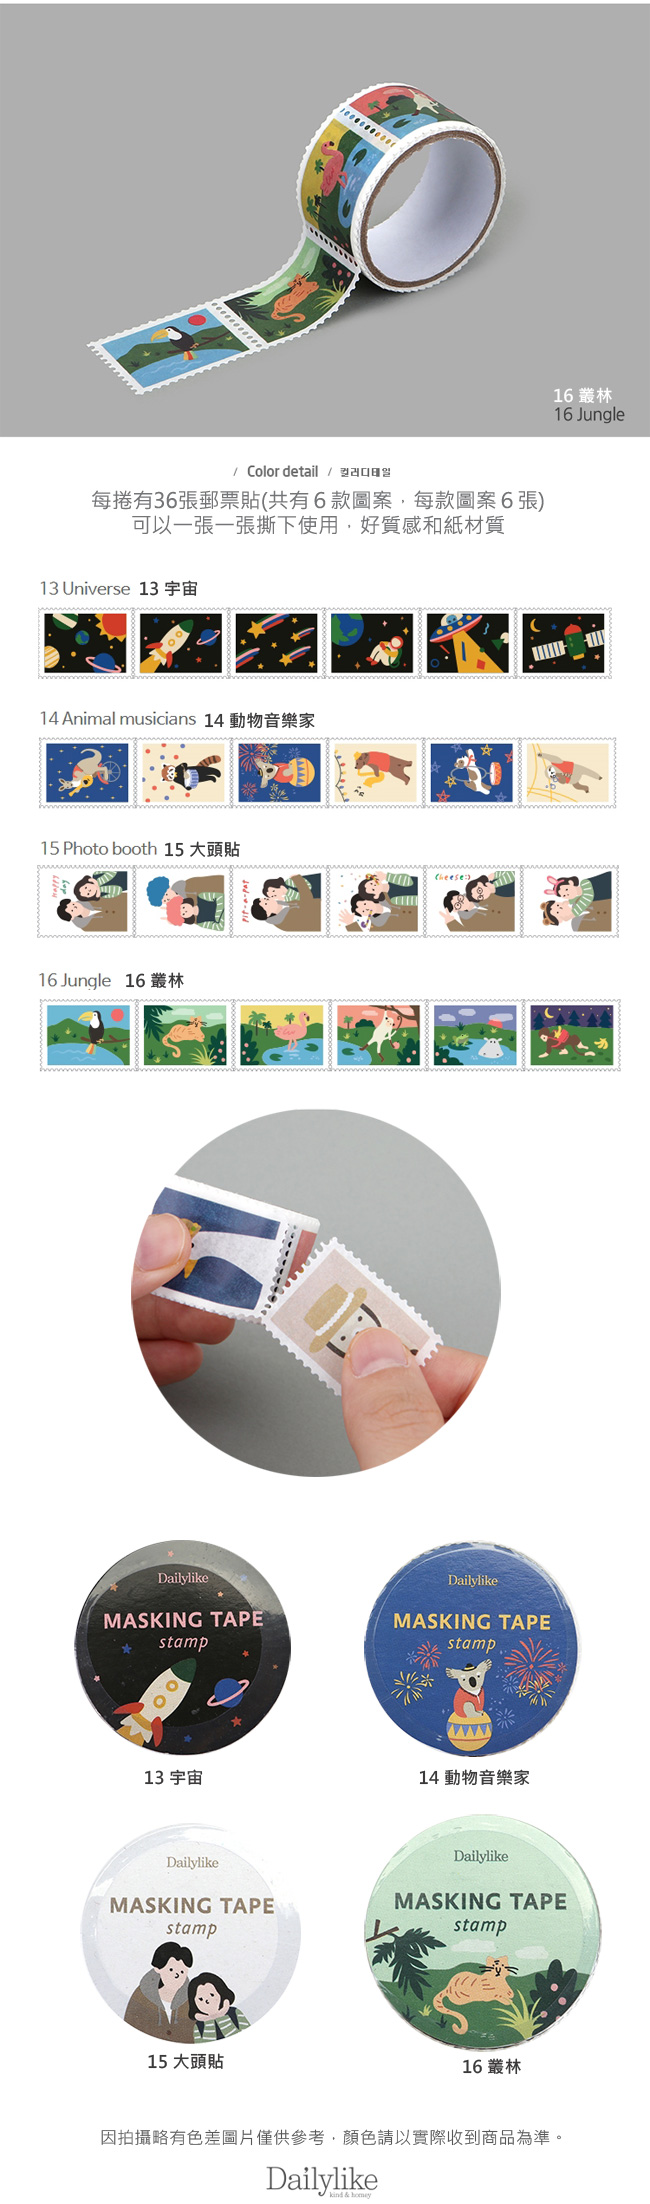 Dailylike 郵票造型紙膠帶(單捲)-14 動物音樂家